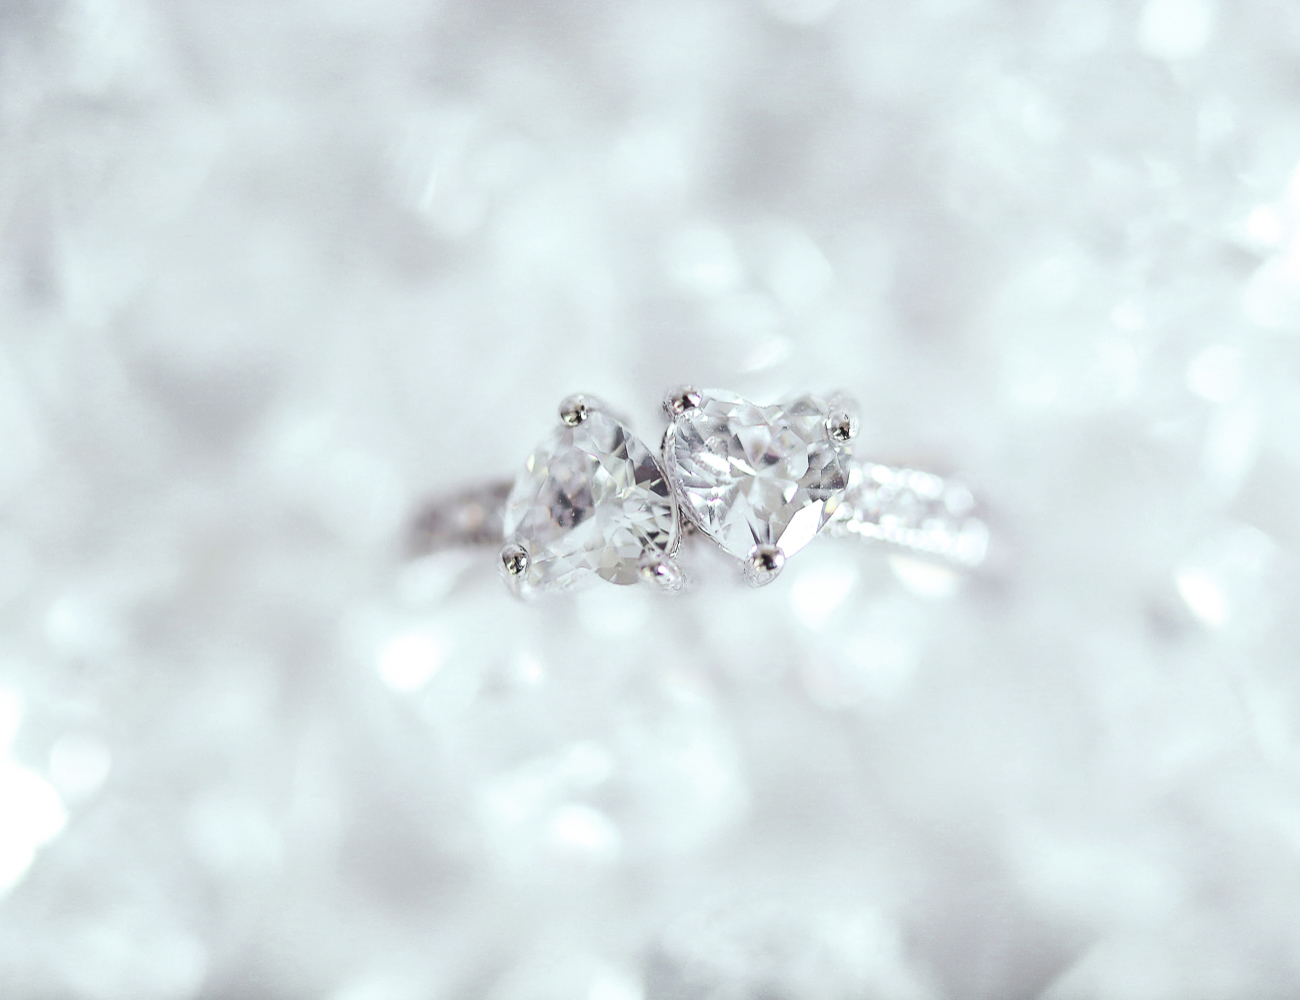 Japanese Research Team Says Diamonds May be Quantum Sensors Best Friend